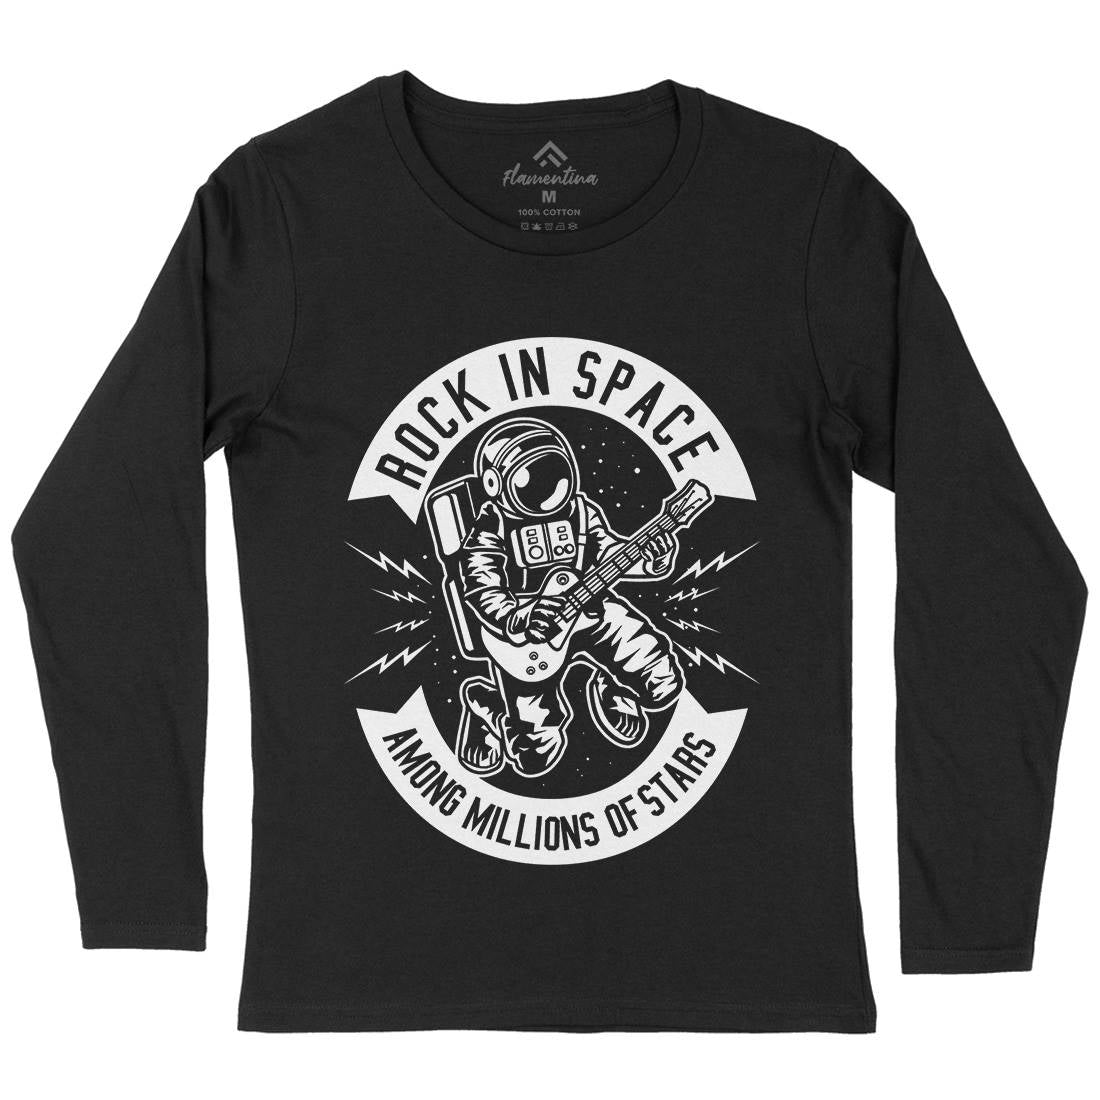 Rock In Space Womens Long Sleeve T-Shirt Music B612